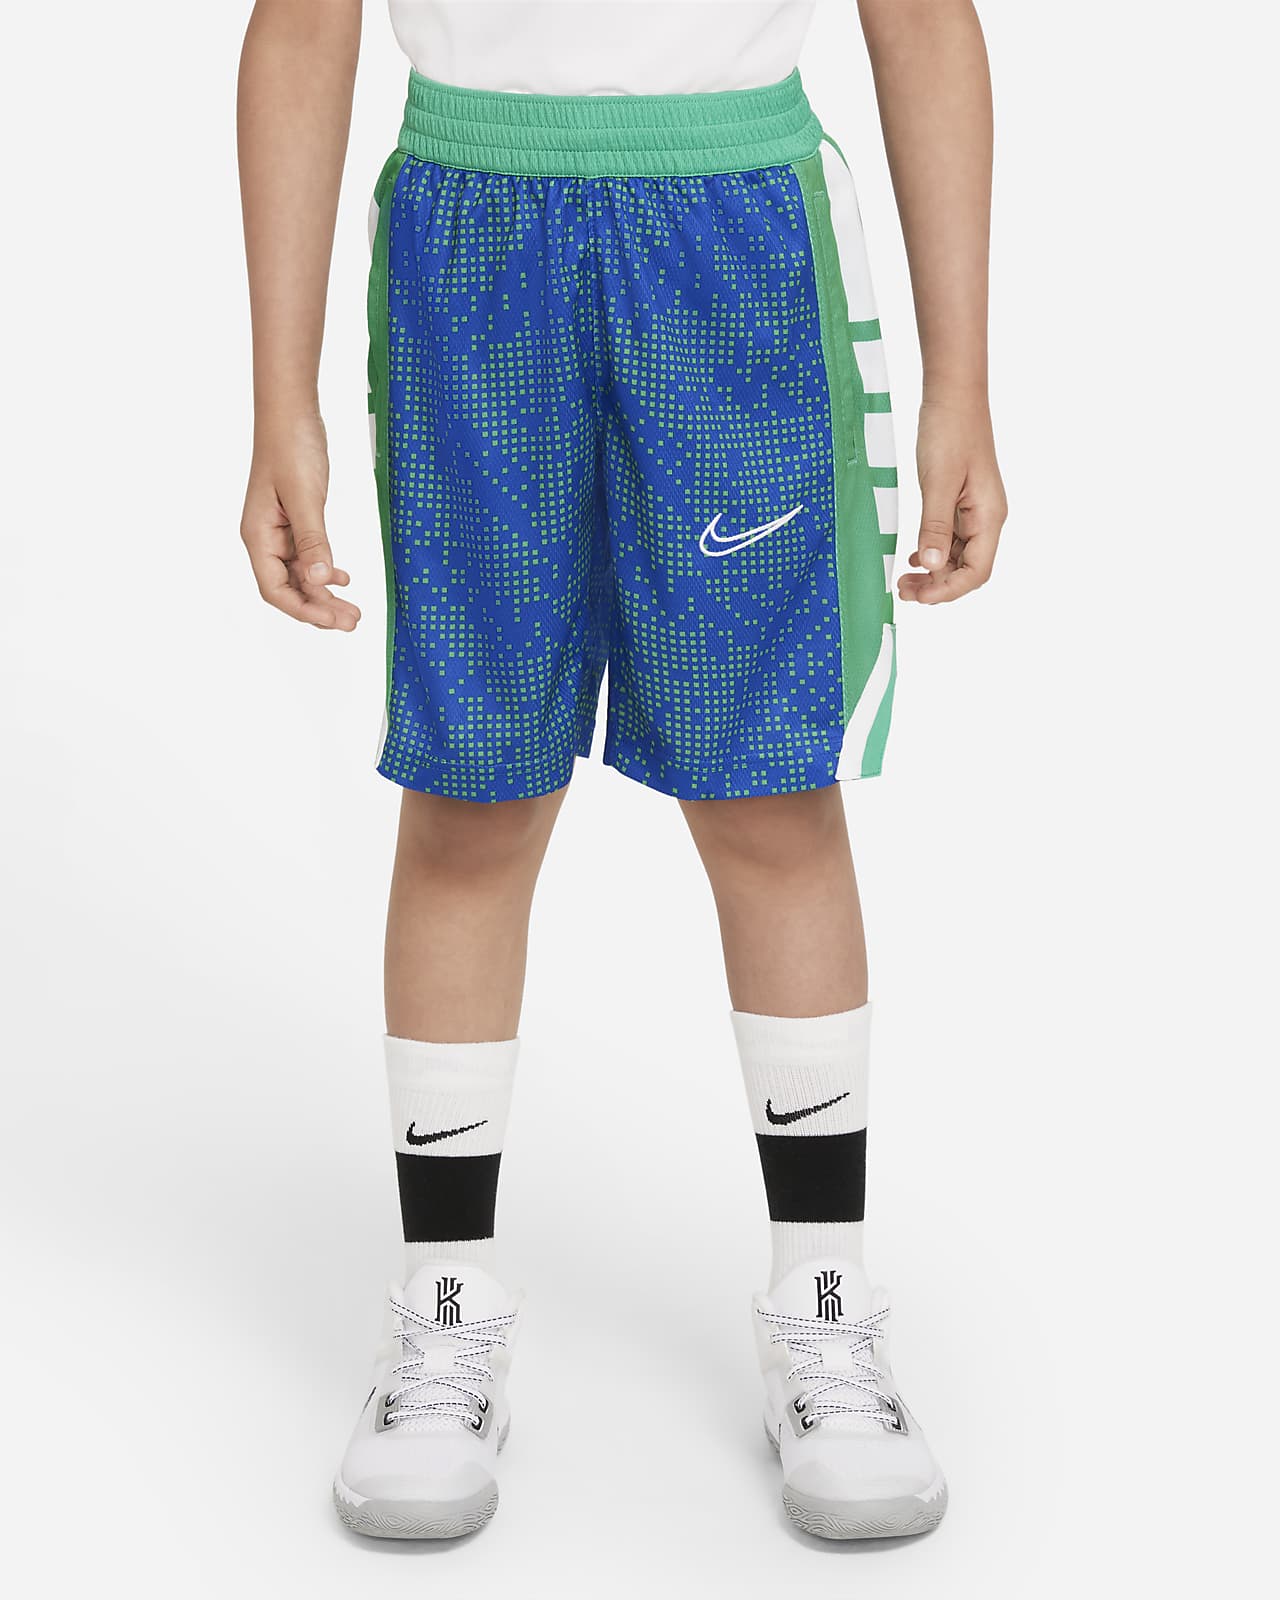 Nike Elite Big Kids' (Boys') Printed Basketball Shorts